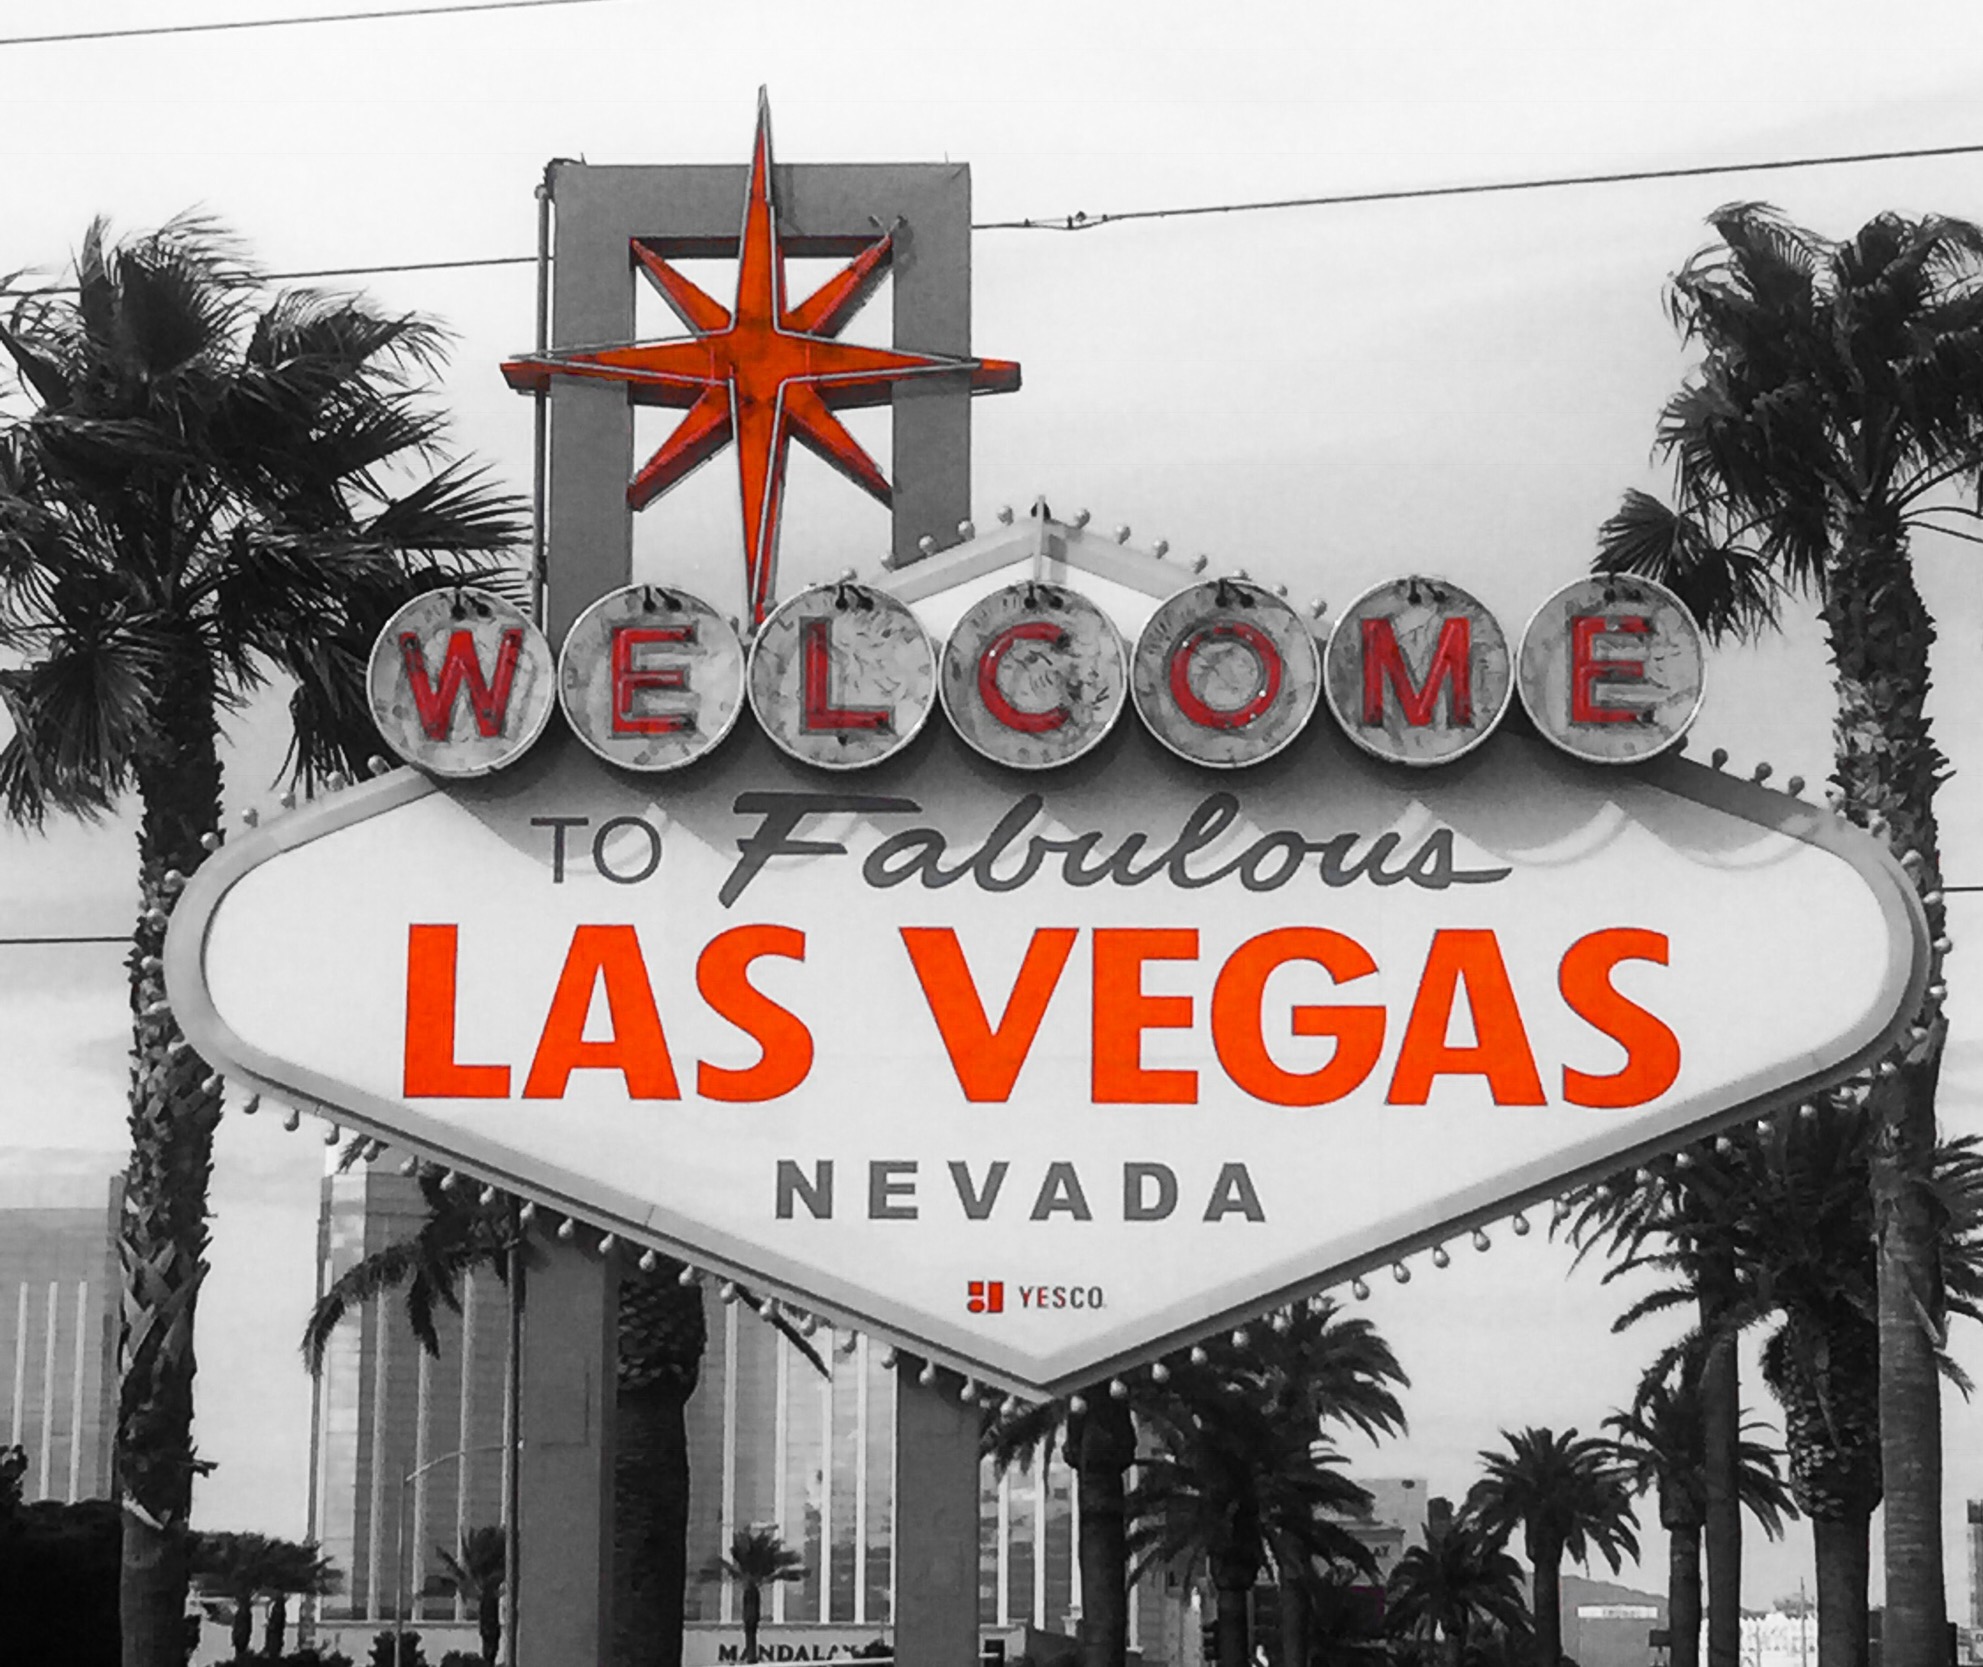 Welcome to Fabulous Las Vegas Nevada.